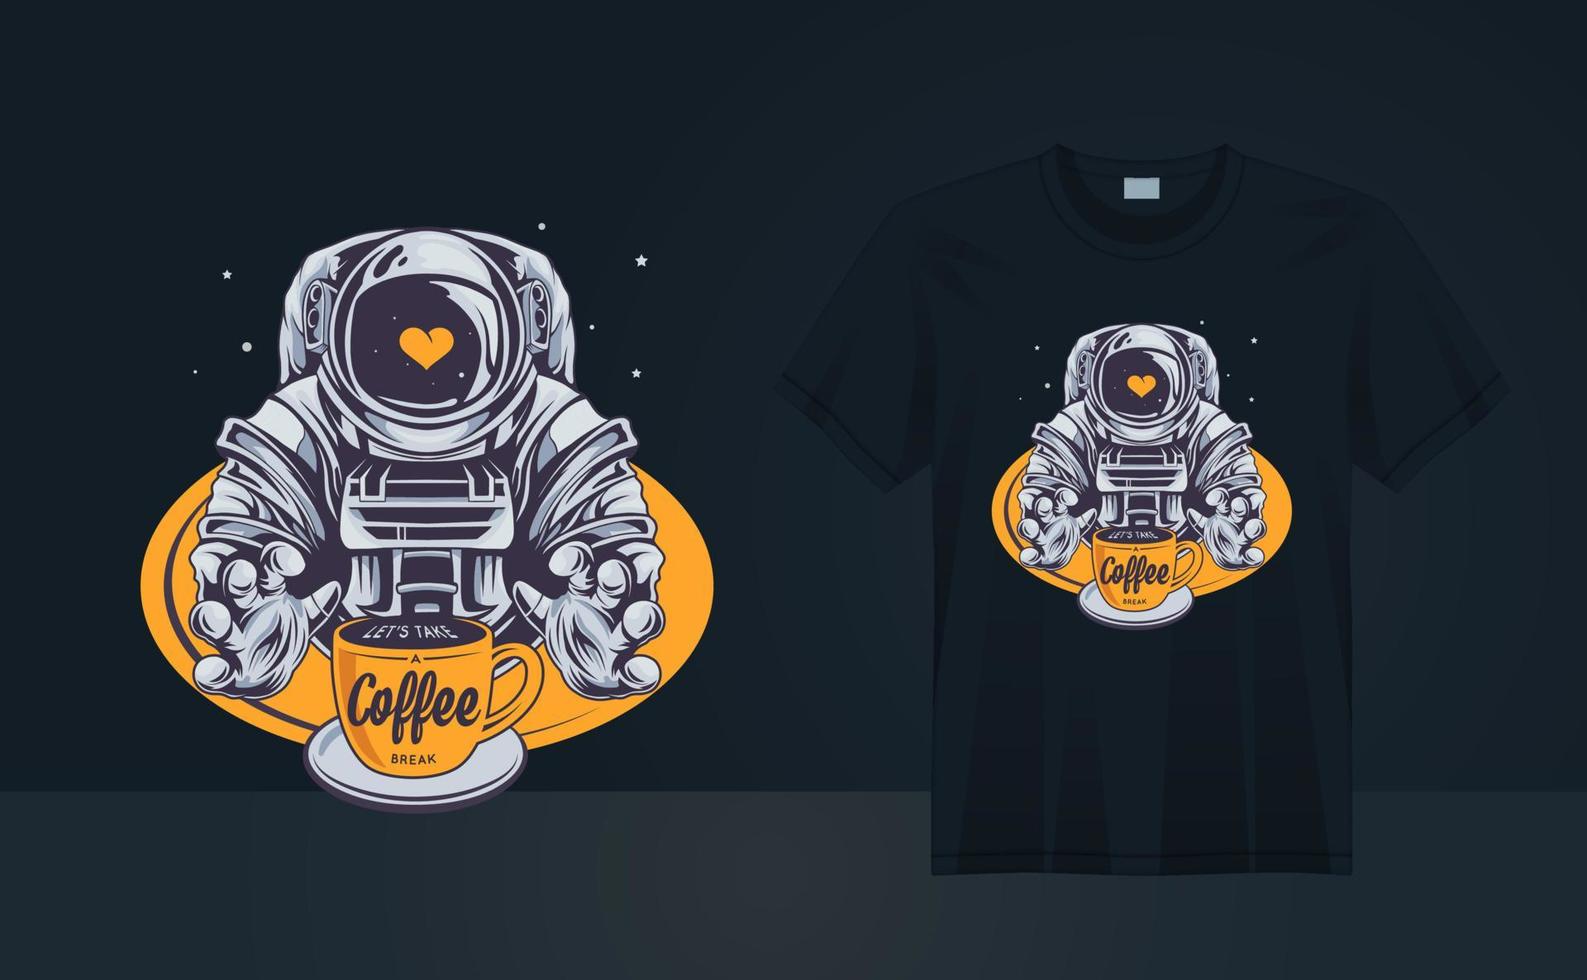 Astronaut love coffee vintage grunge t-shirt design for t-shirt printing, poster, wall art, clothing, fashion tshirt vector illustration